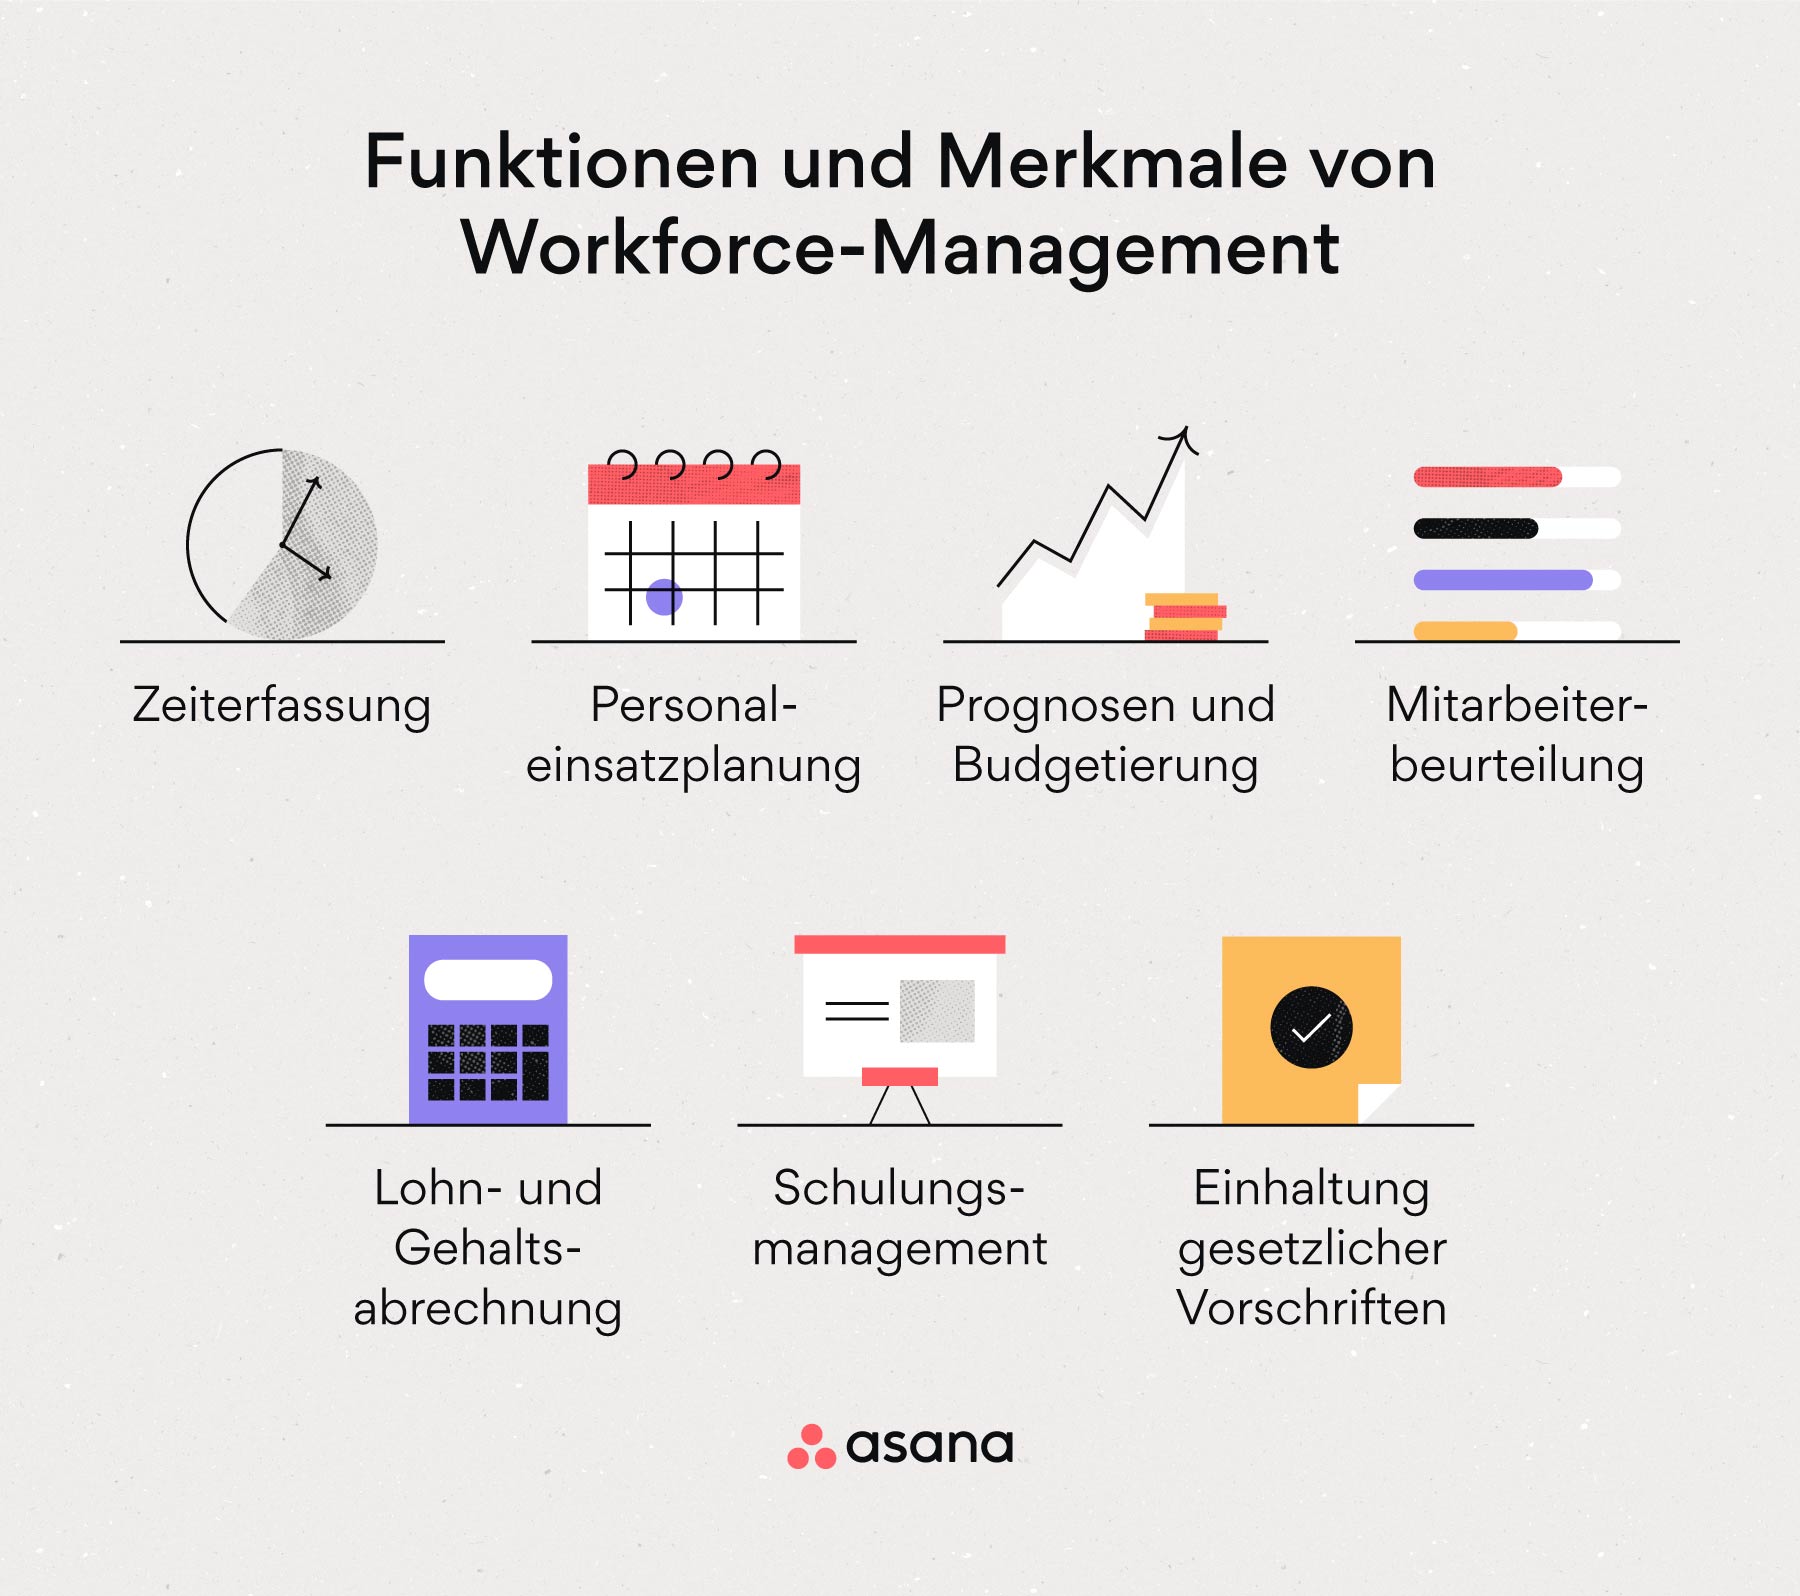 Workforce-Management-Tools